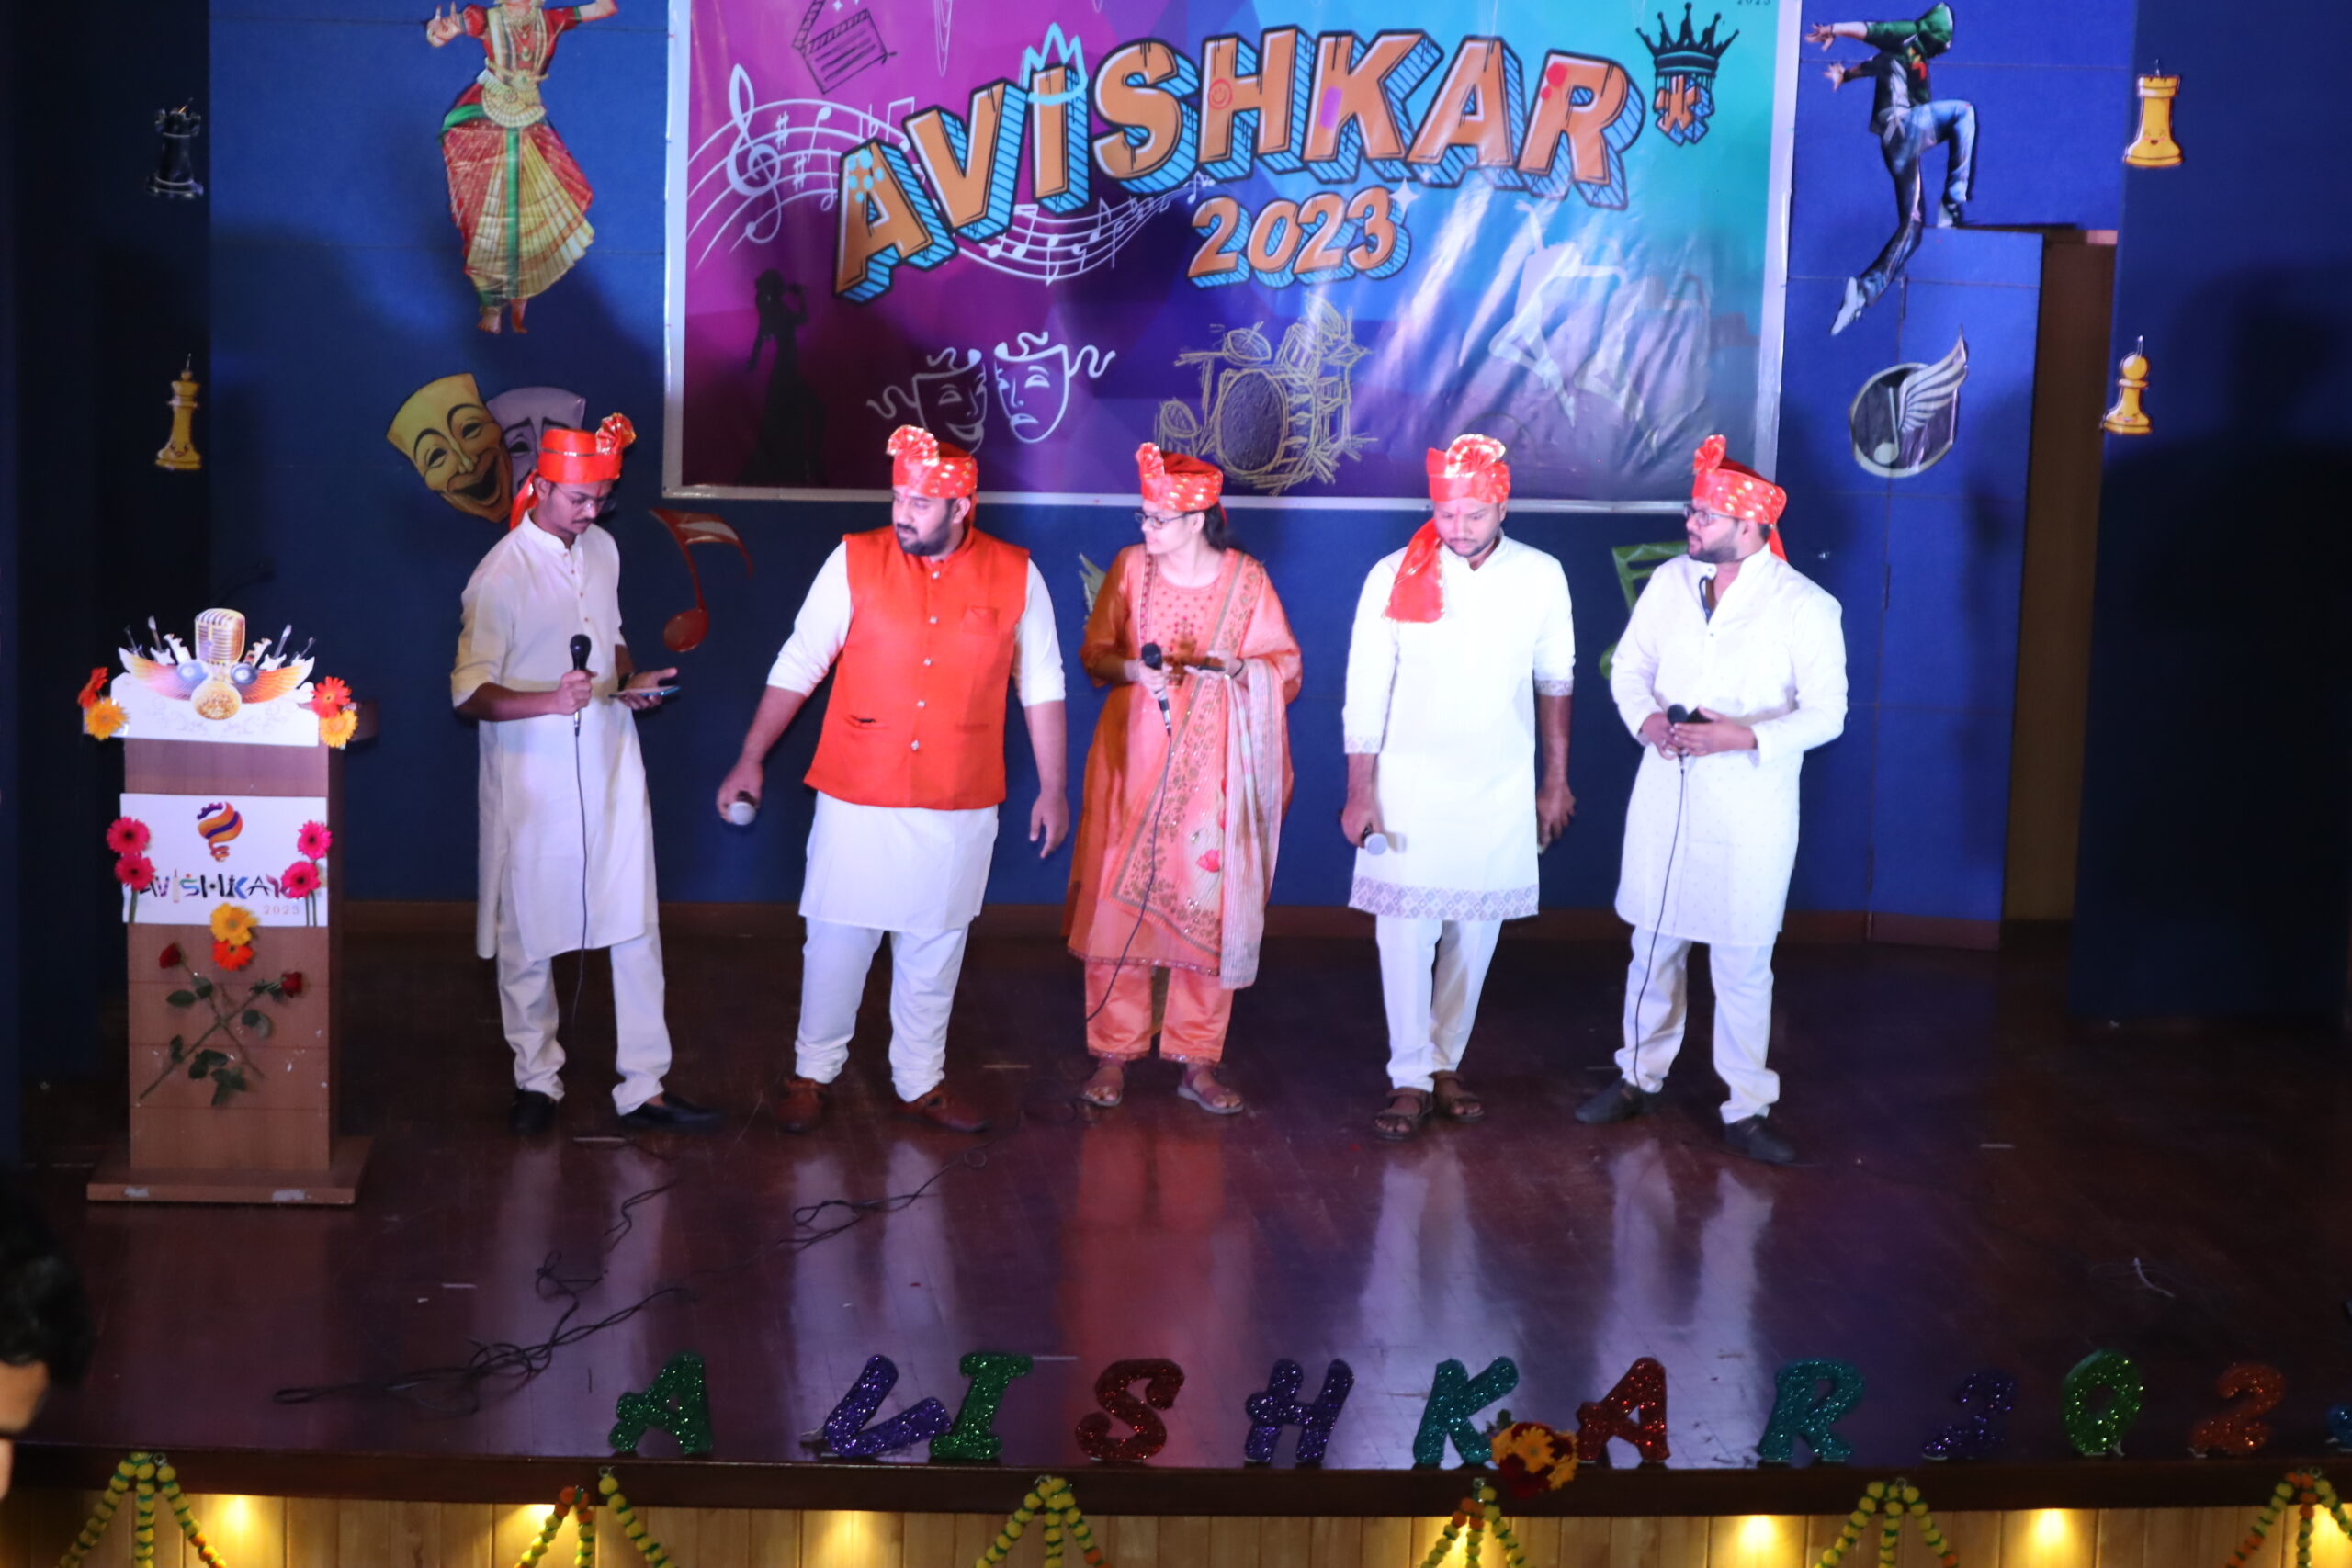 CCG Avishkar: Celebrating Student Excellence